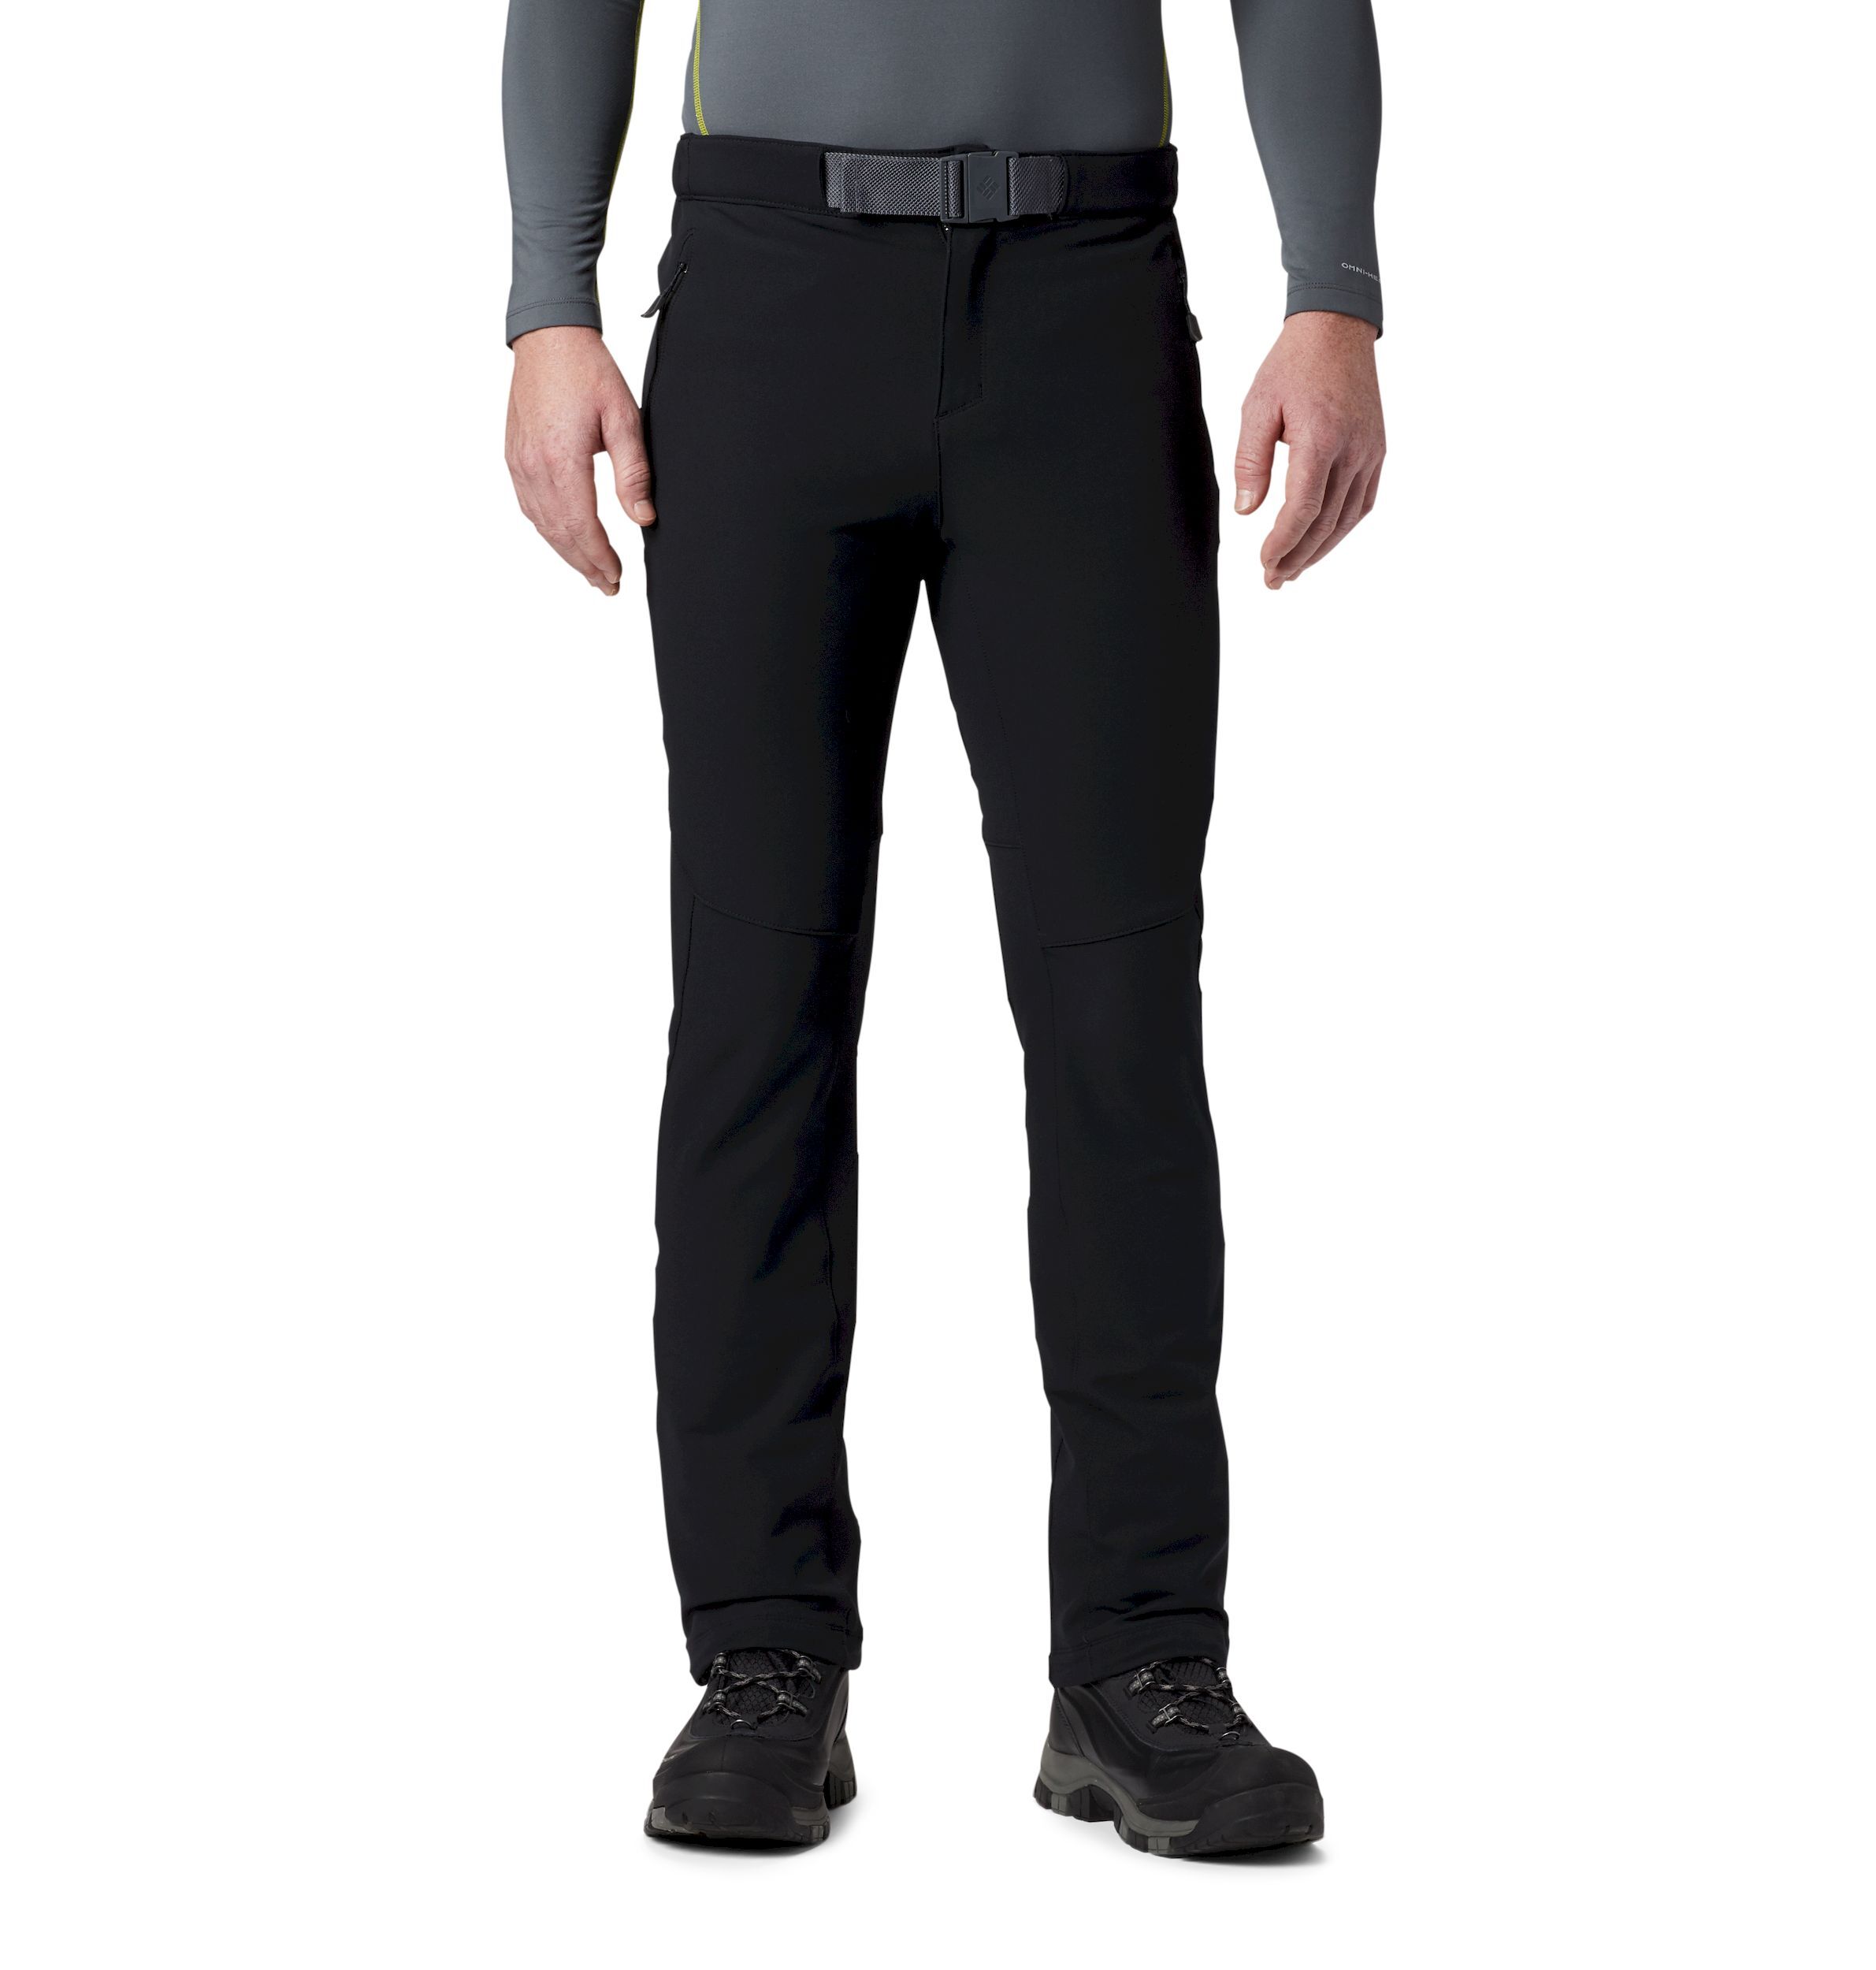 Columbia - Passo Alto II Heat - Short - Walking trousers - Men's